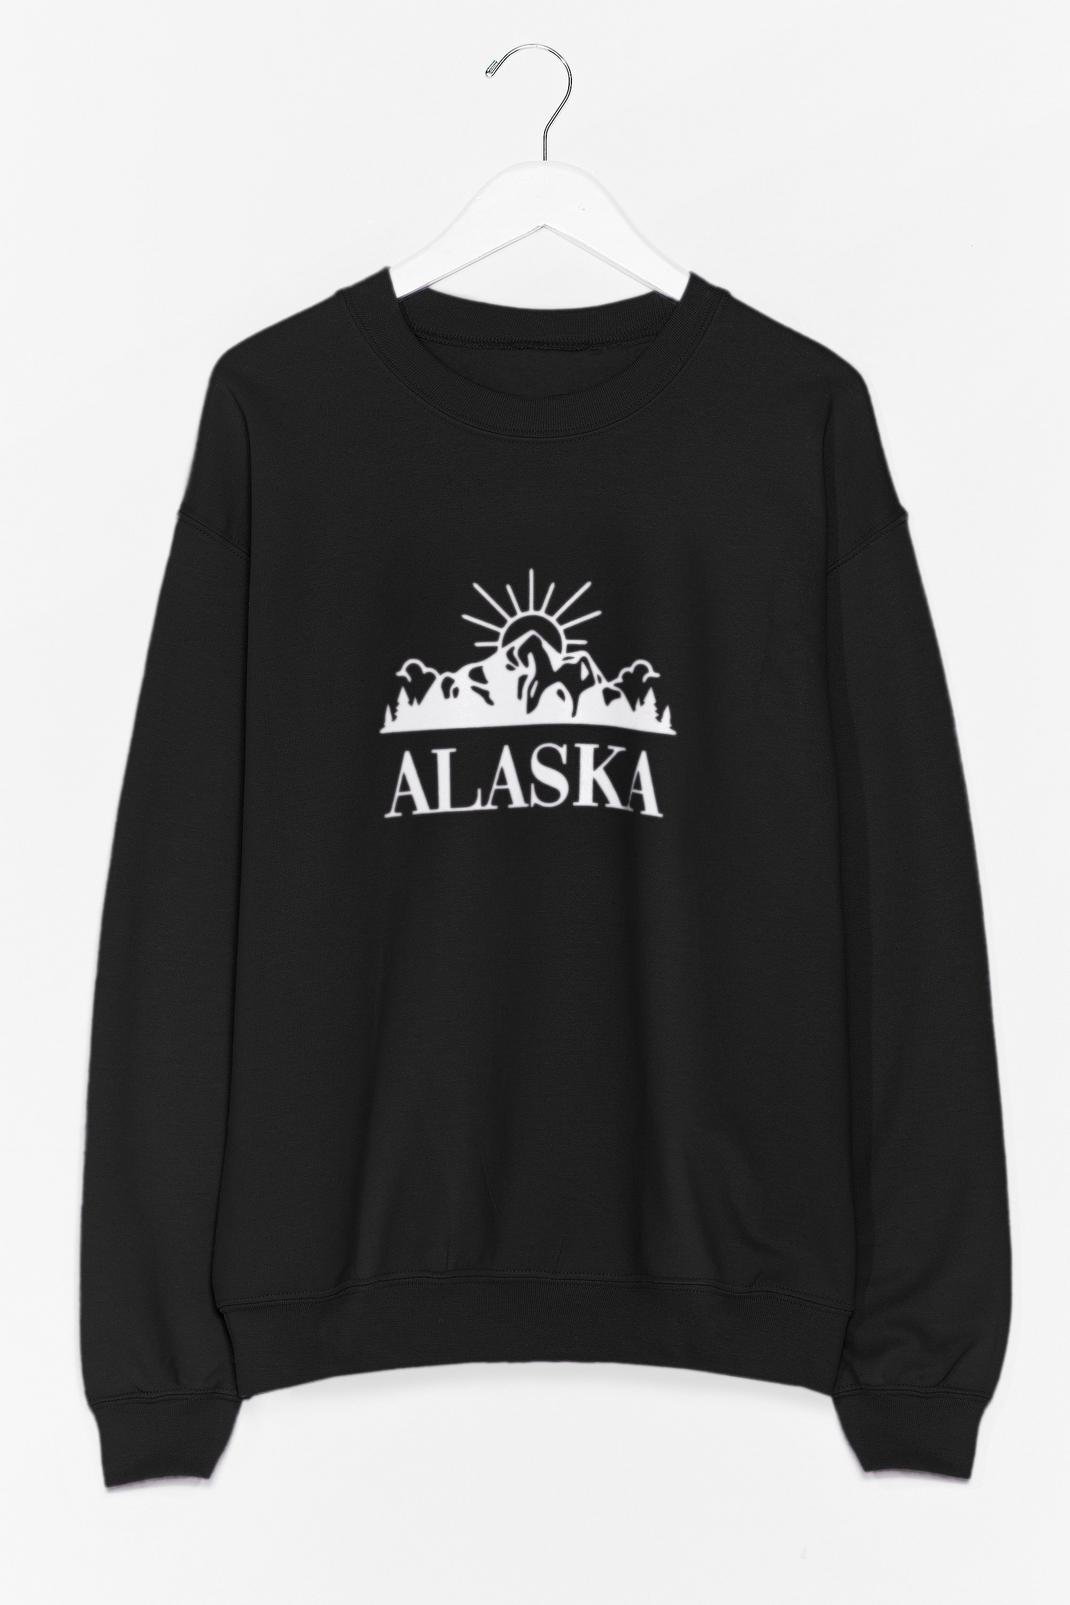 Let Us Snow You the Way Alaska Graphic Sweatshirt image number 1